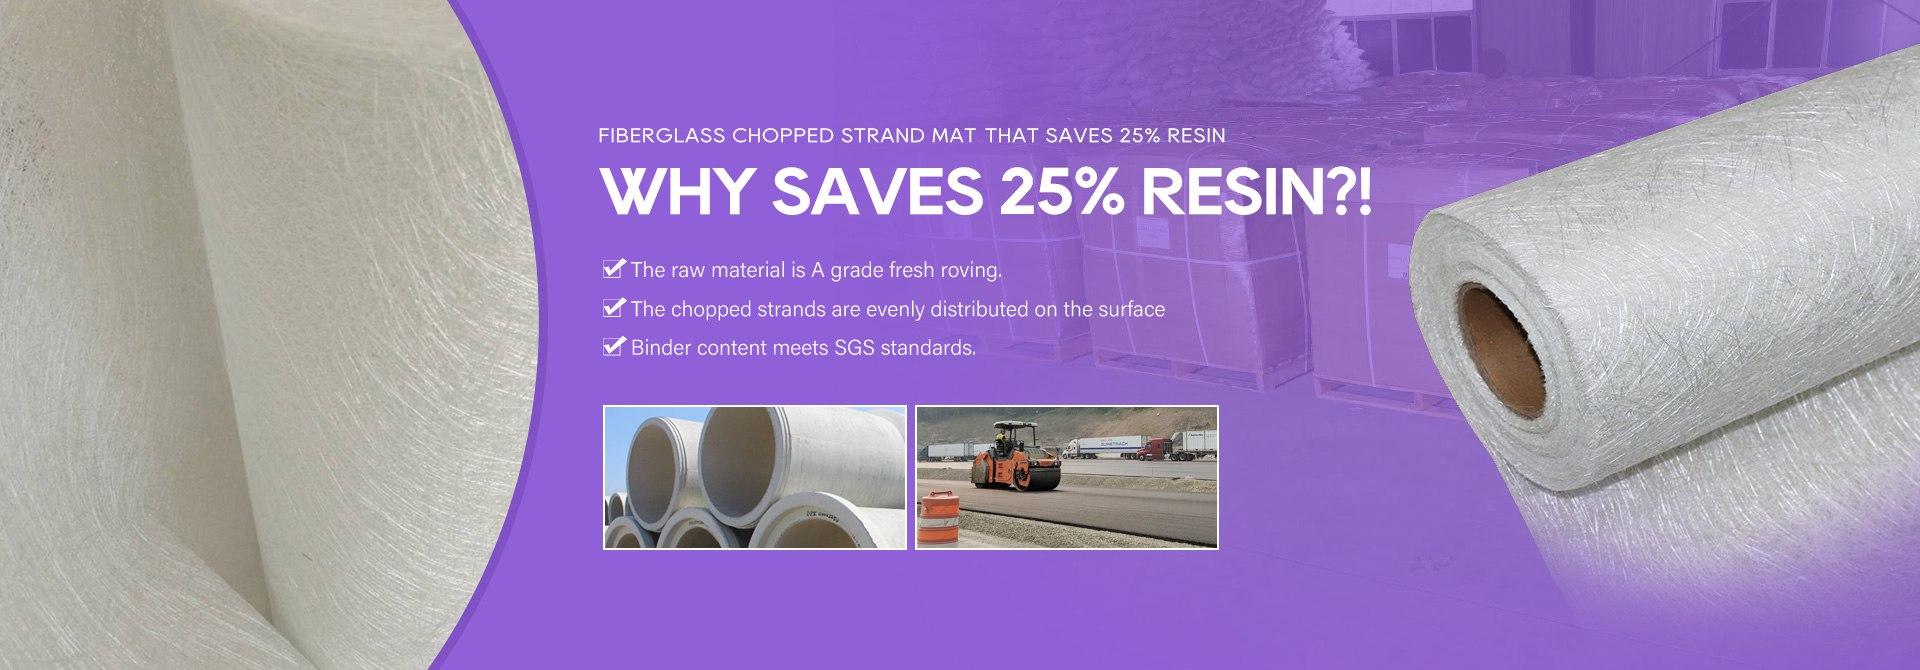 why fiberglass chopped mat saves 25% resin-HD Fiberglass